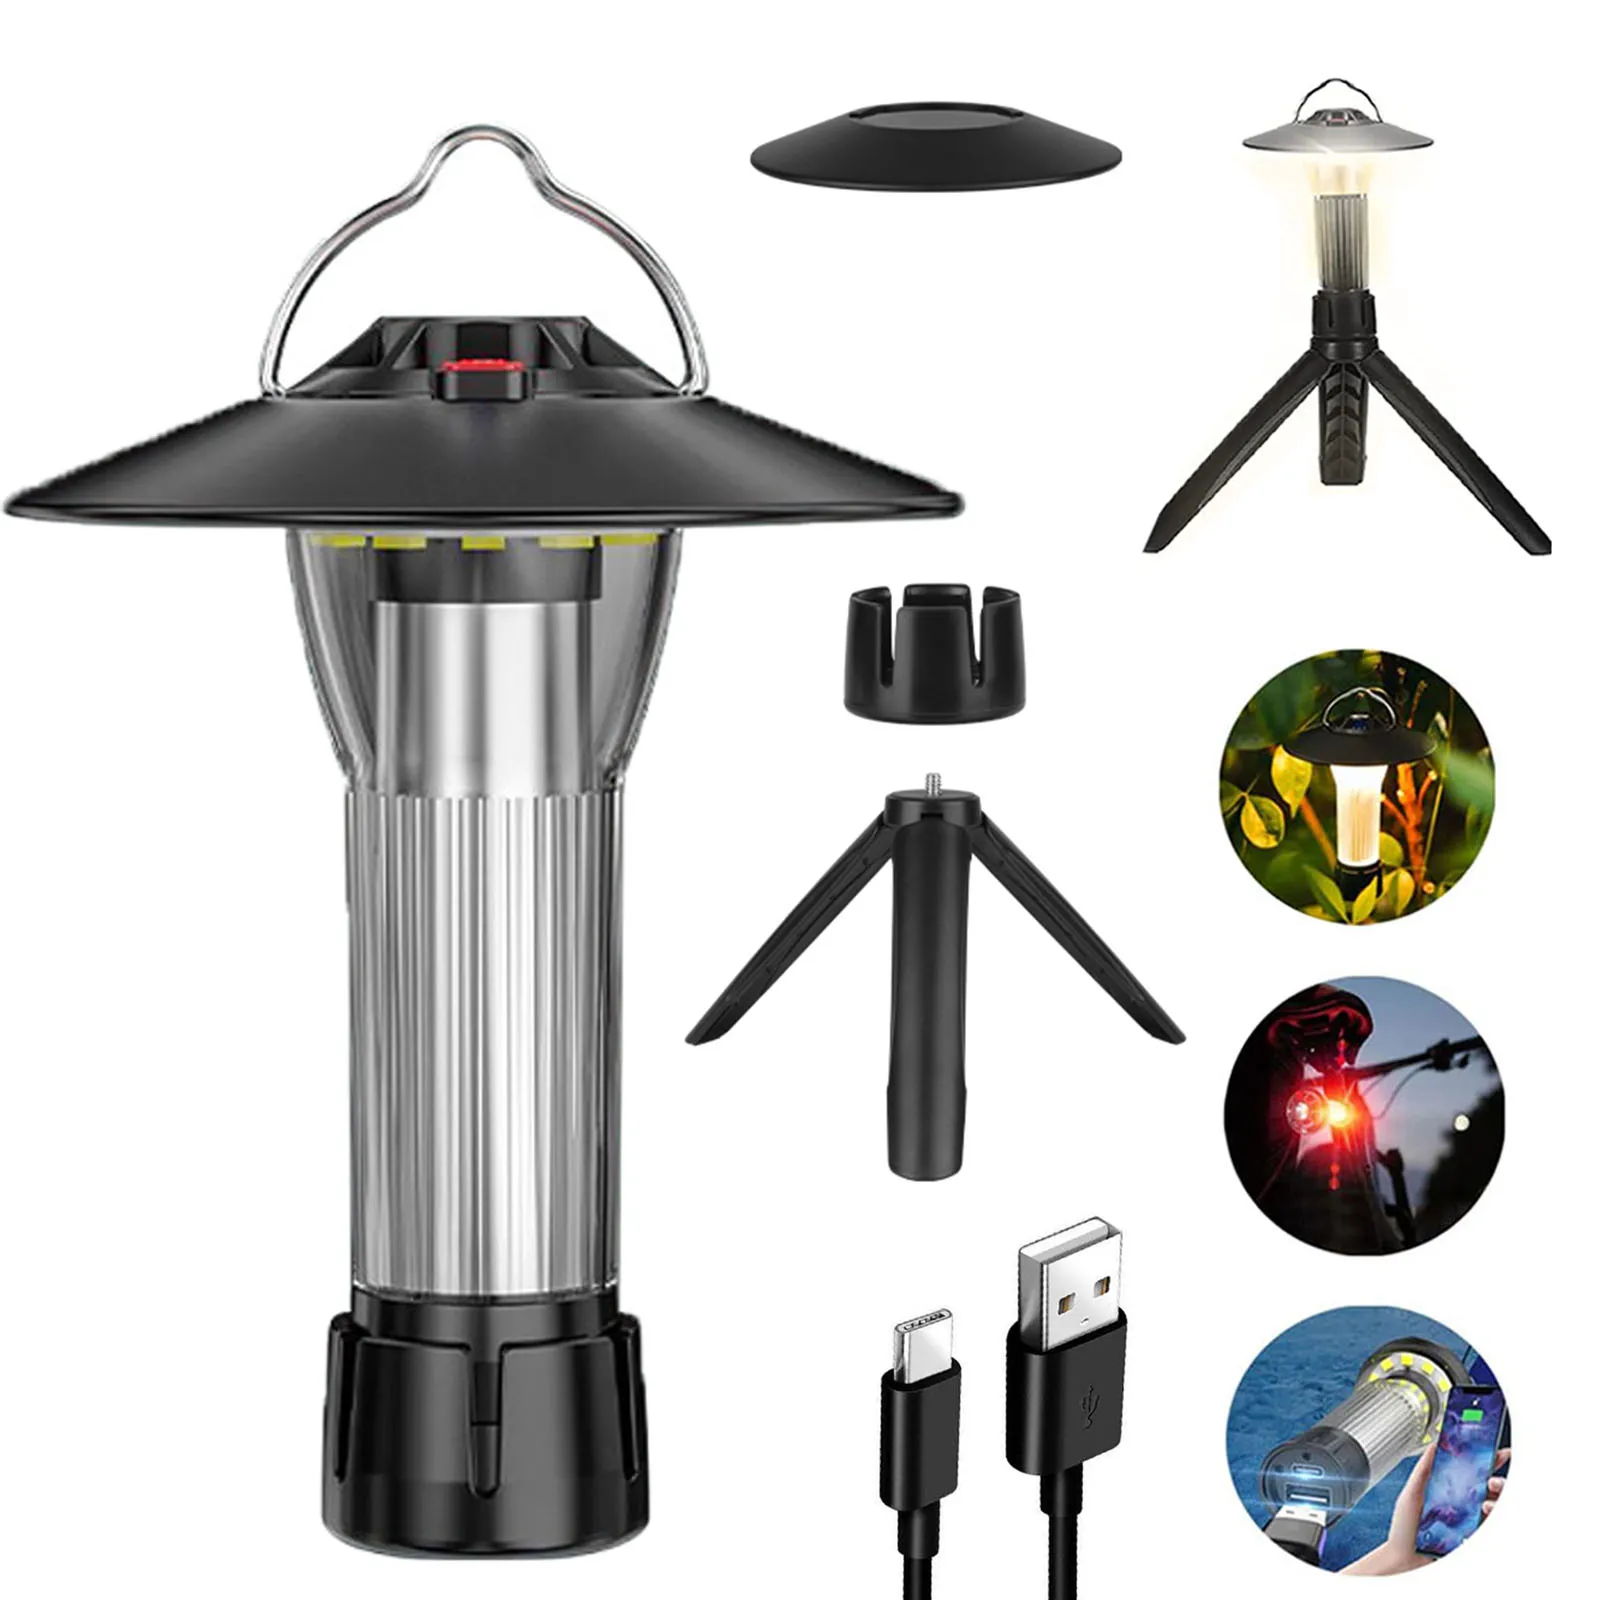 3000mAh Camping Lantern with Magnetic Base Similar To Blackdog Goal Zero Lantern 5 Lighting Modes Led Flashlights Emergency Lamp